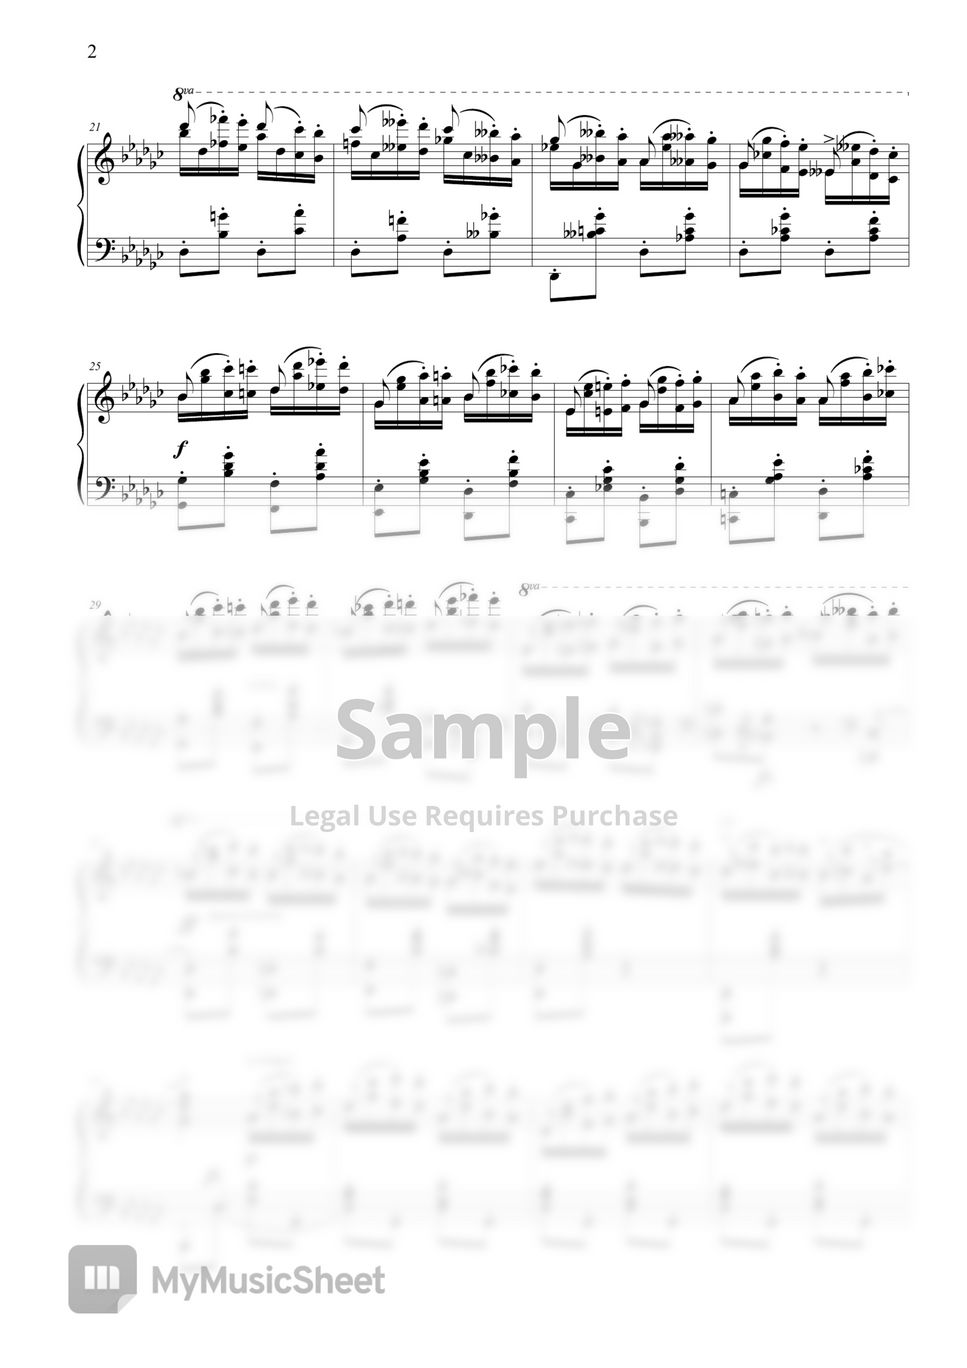 F. Chopin - Chopin Etude Op.25, No.9 by MyMusicSheet Official